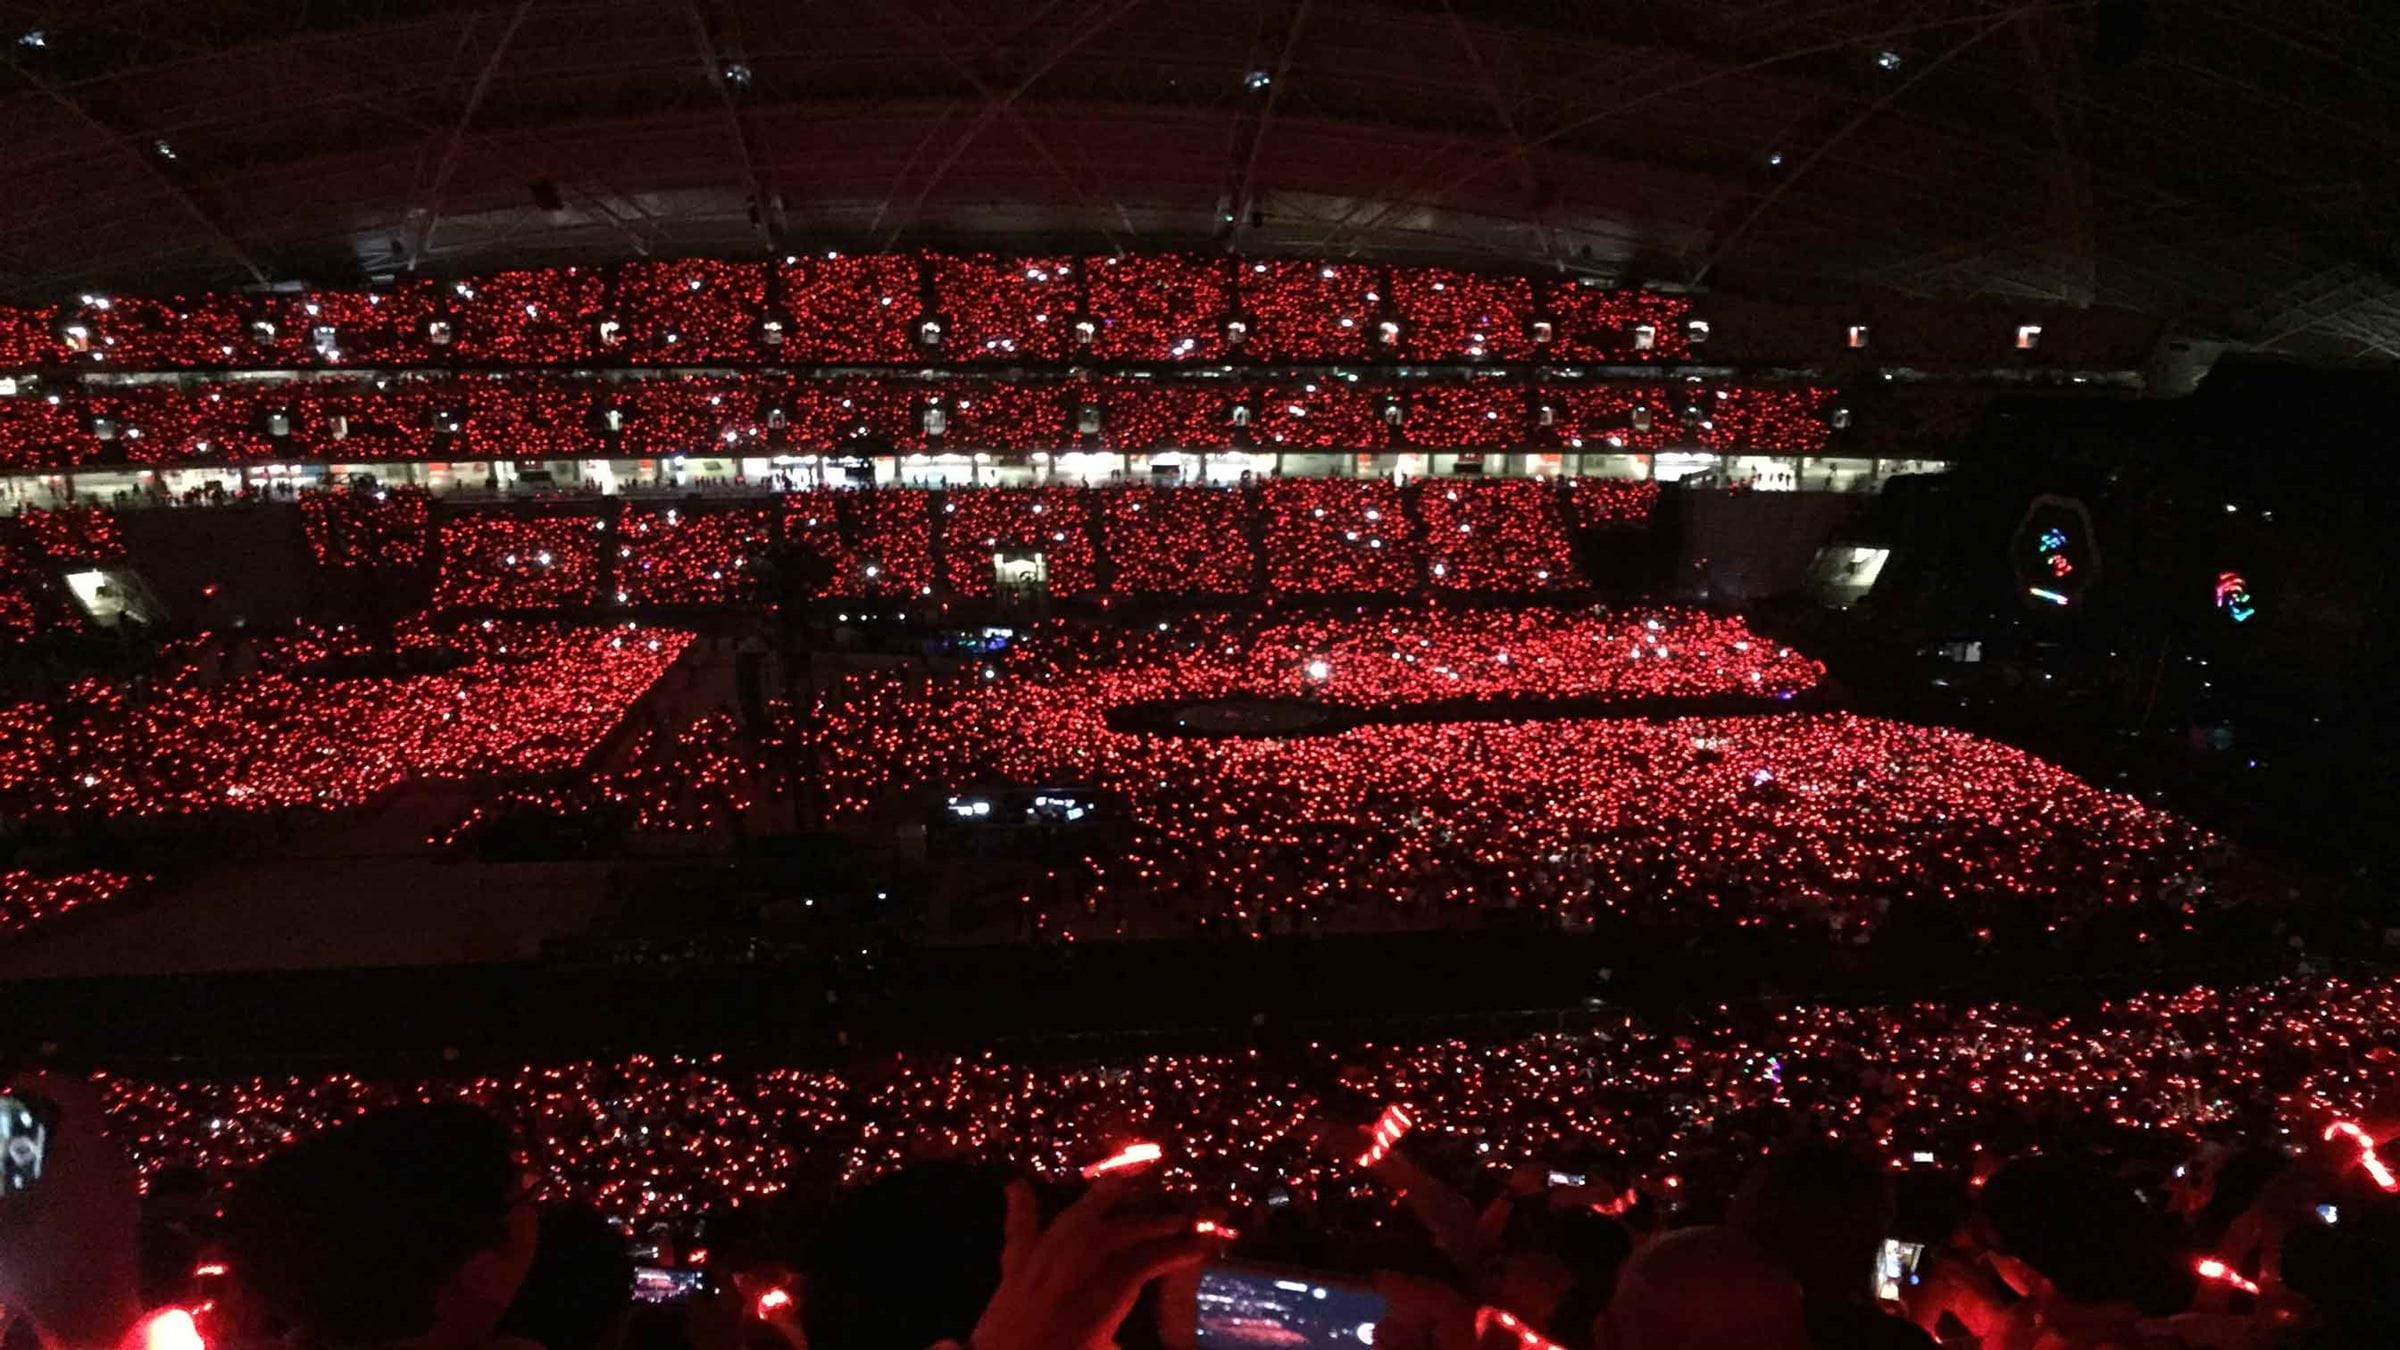 Stadium lit up with red